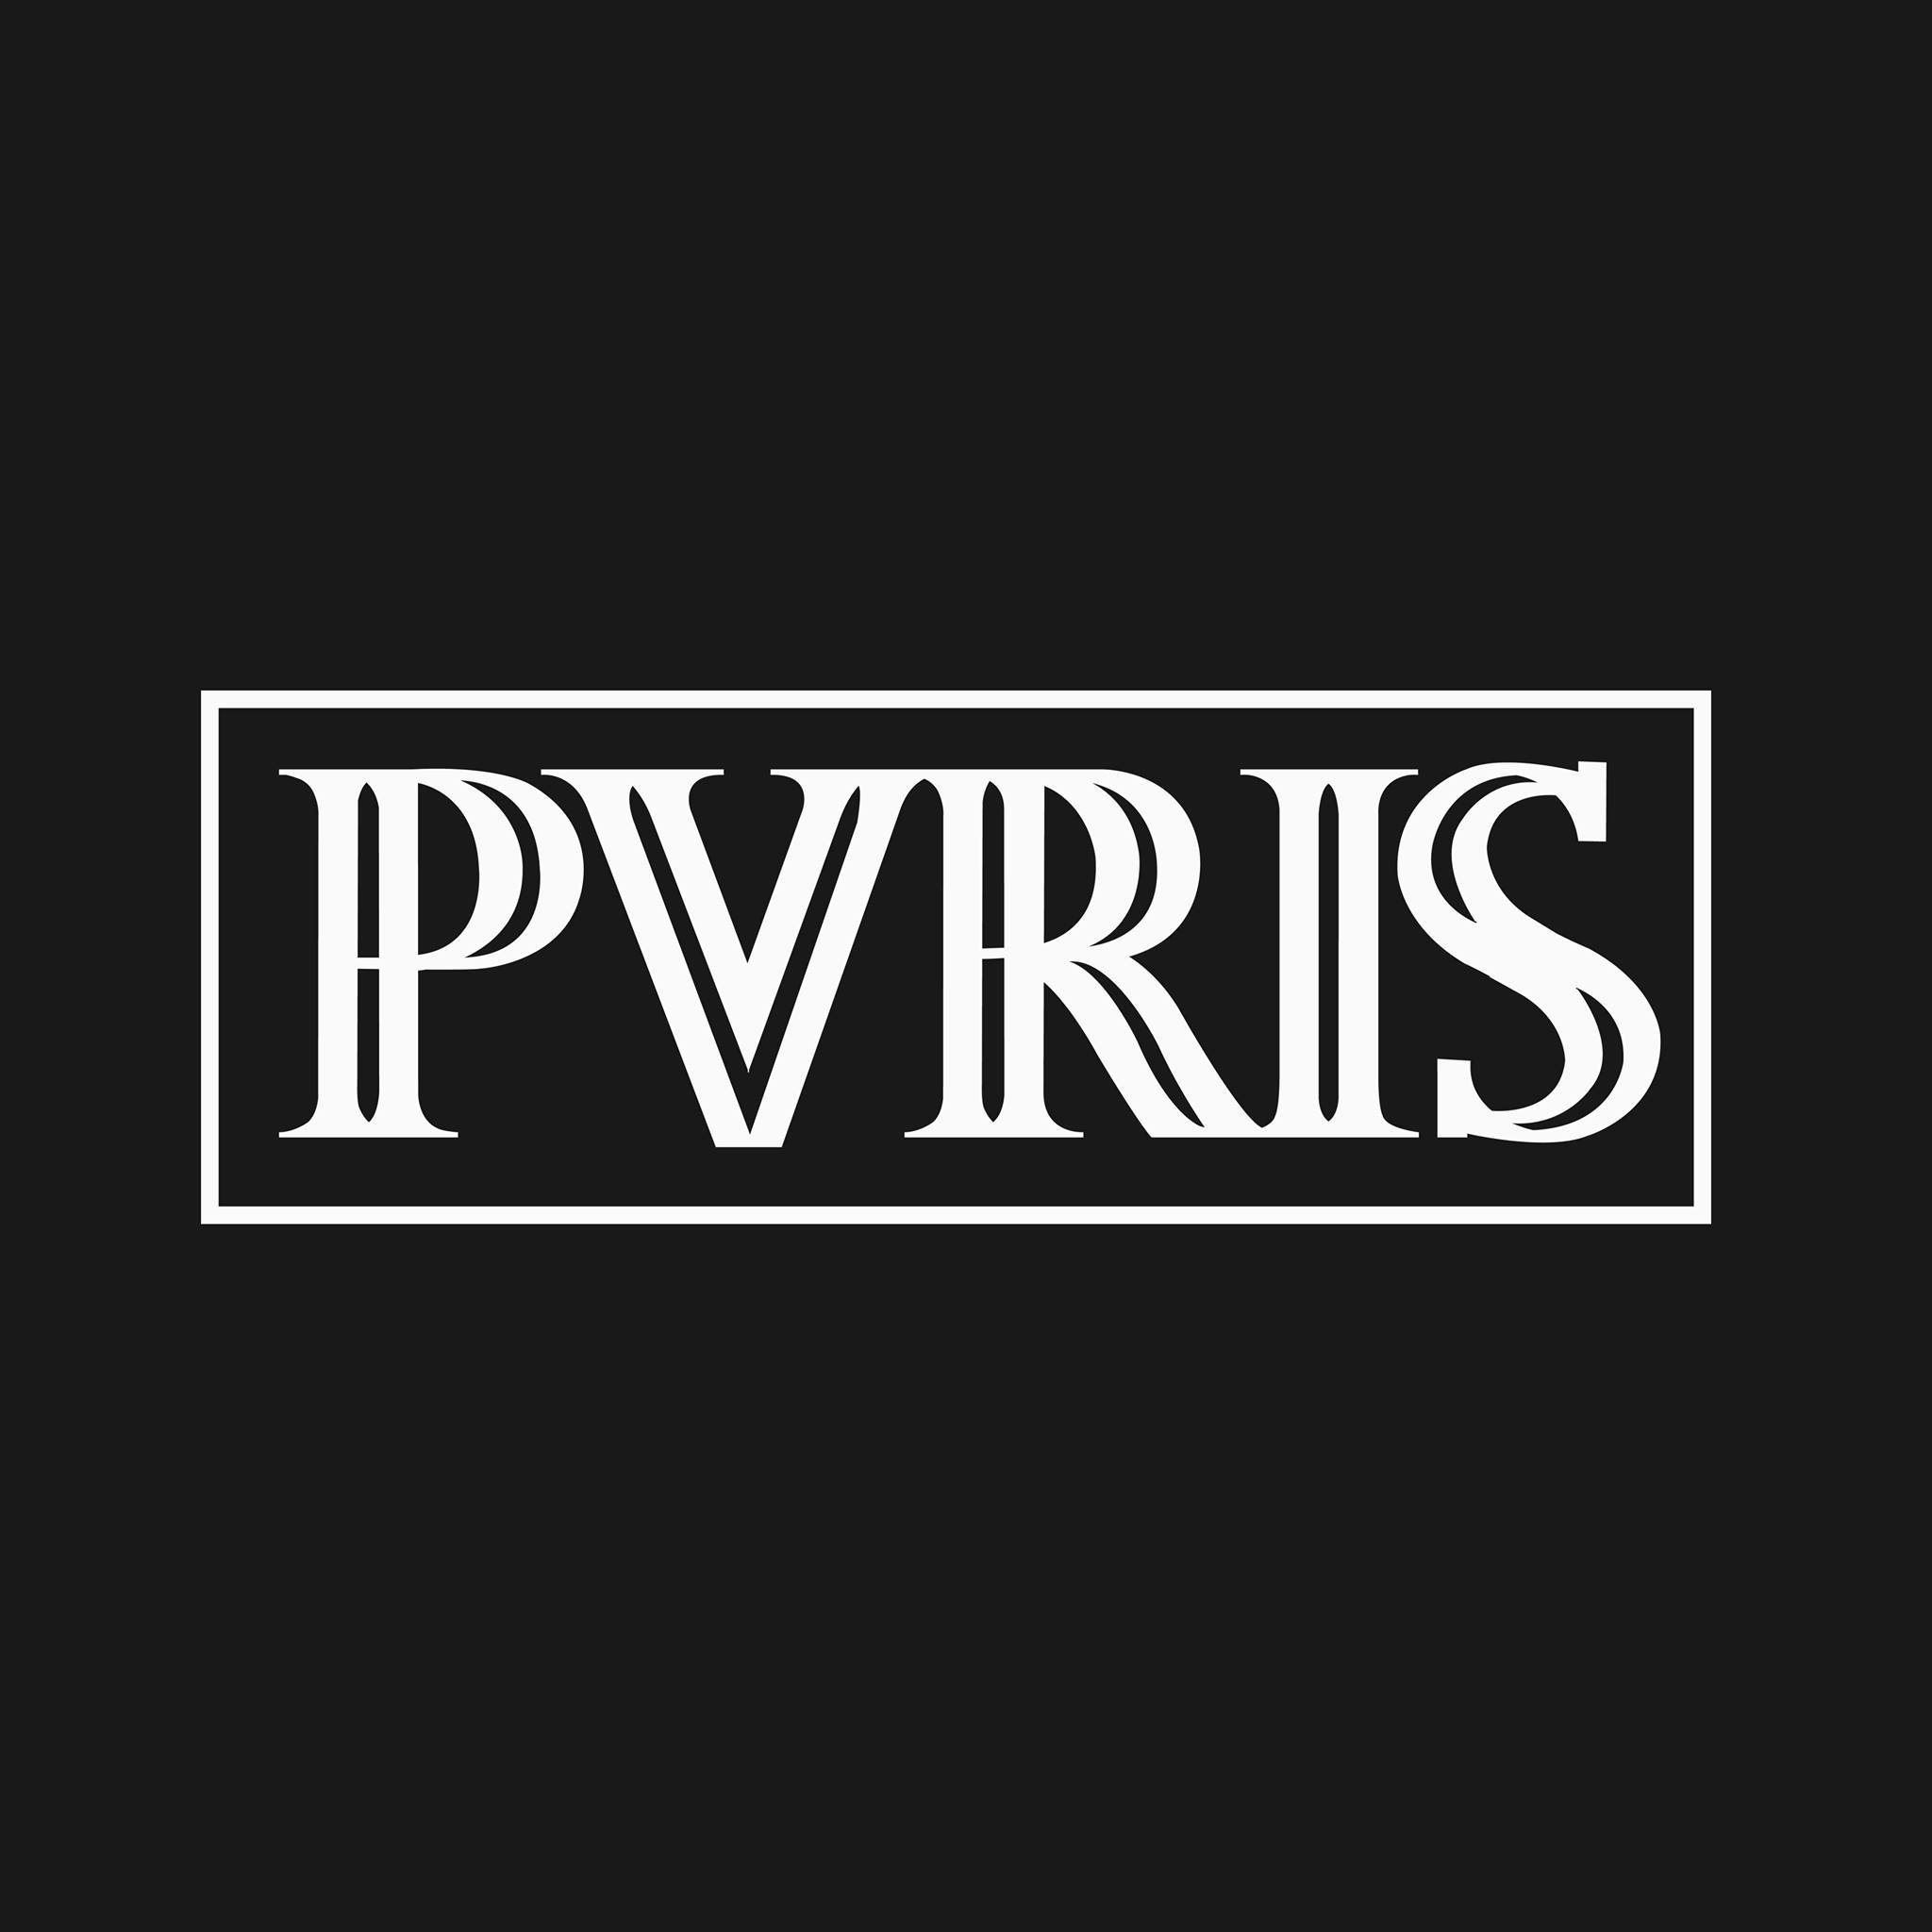 PVRIS – “Holy”